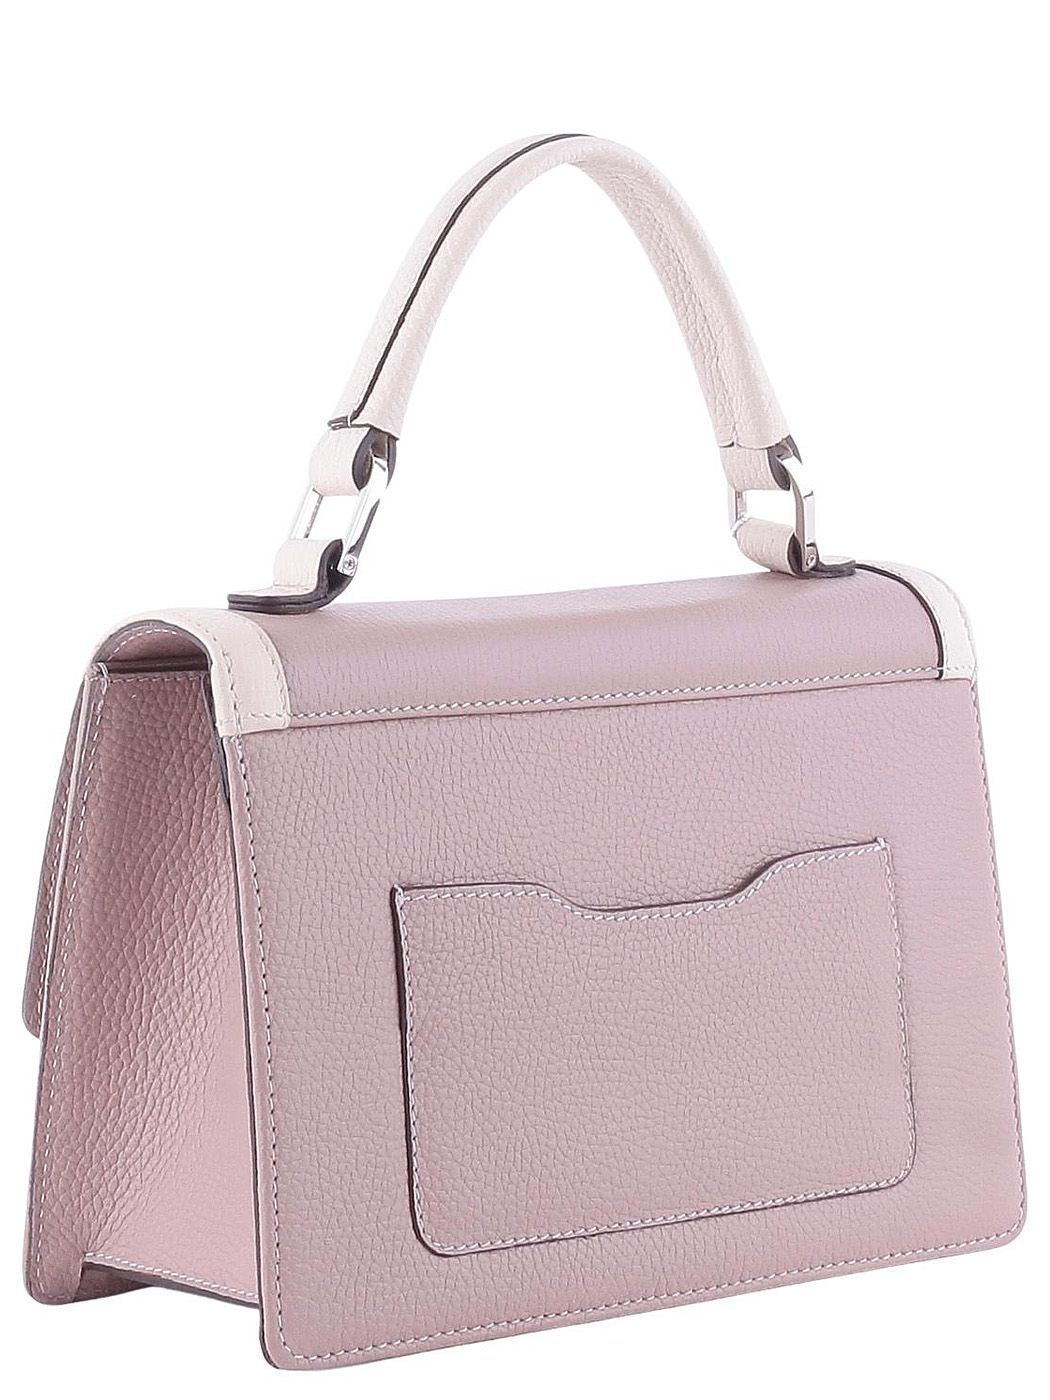 13252 FD фрукт-молоч сумка  жен. летн. натуральная кожа/текстиль розовый Fiato Dream